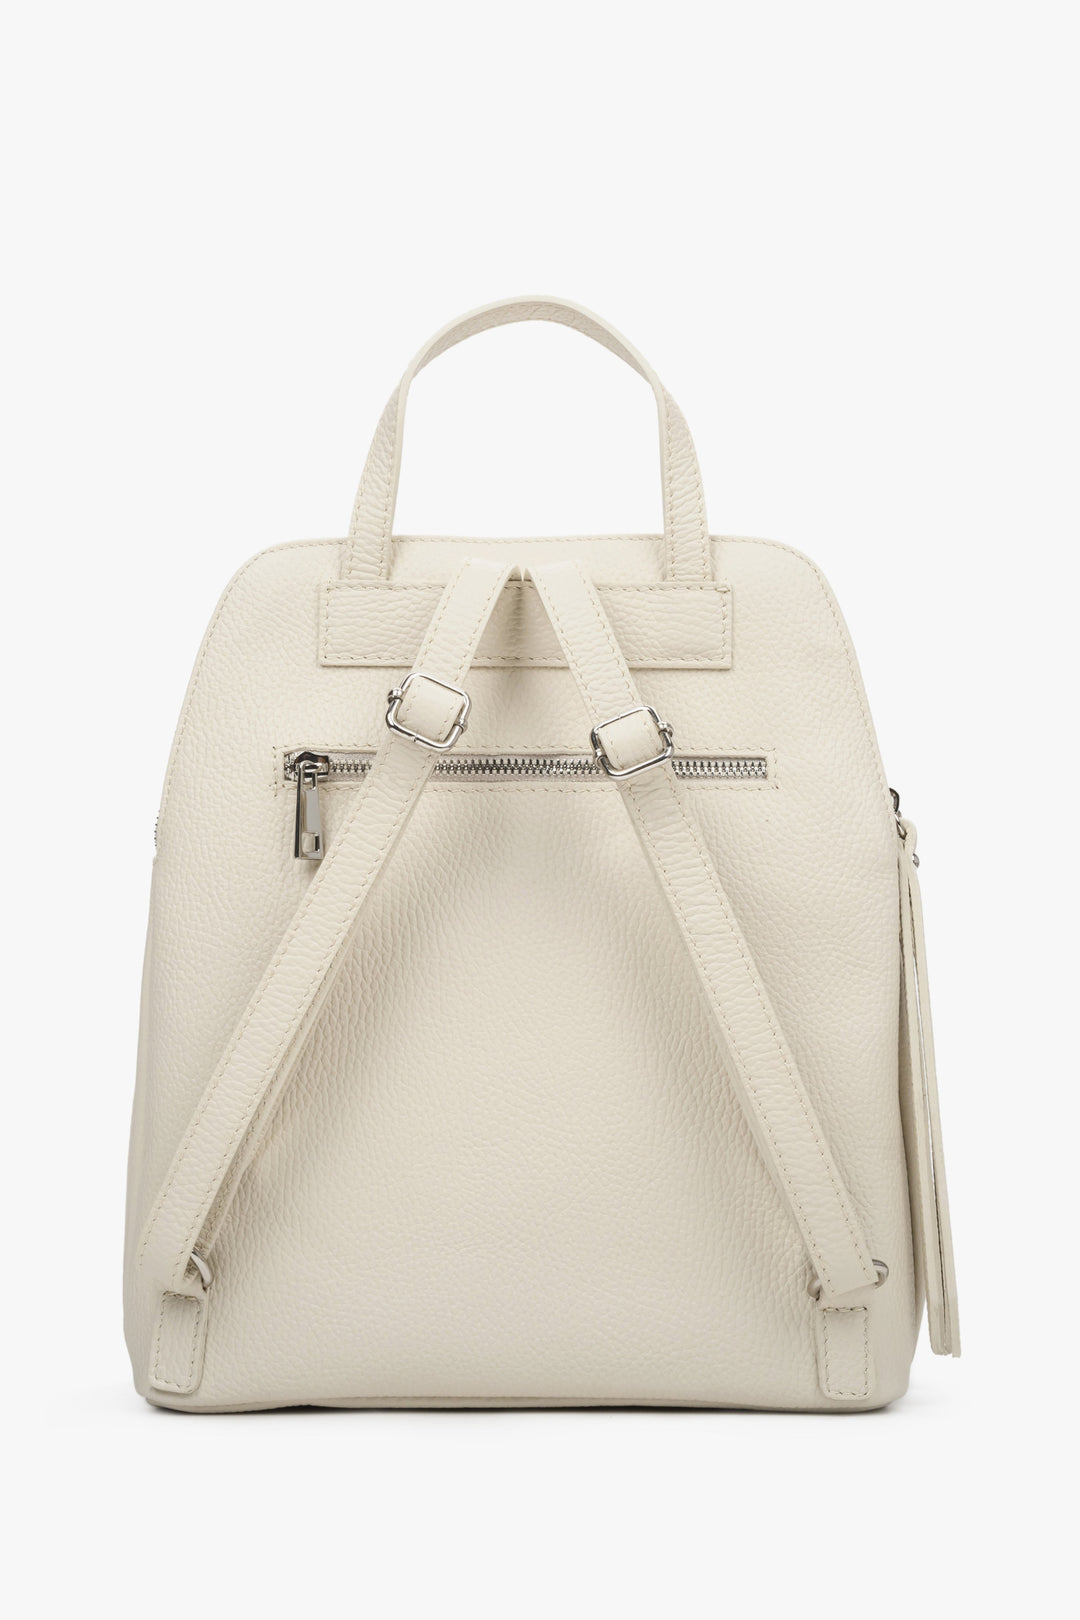 Urban women's backpack in light beige made from genuine full-grain leather by Estro - reverse side